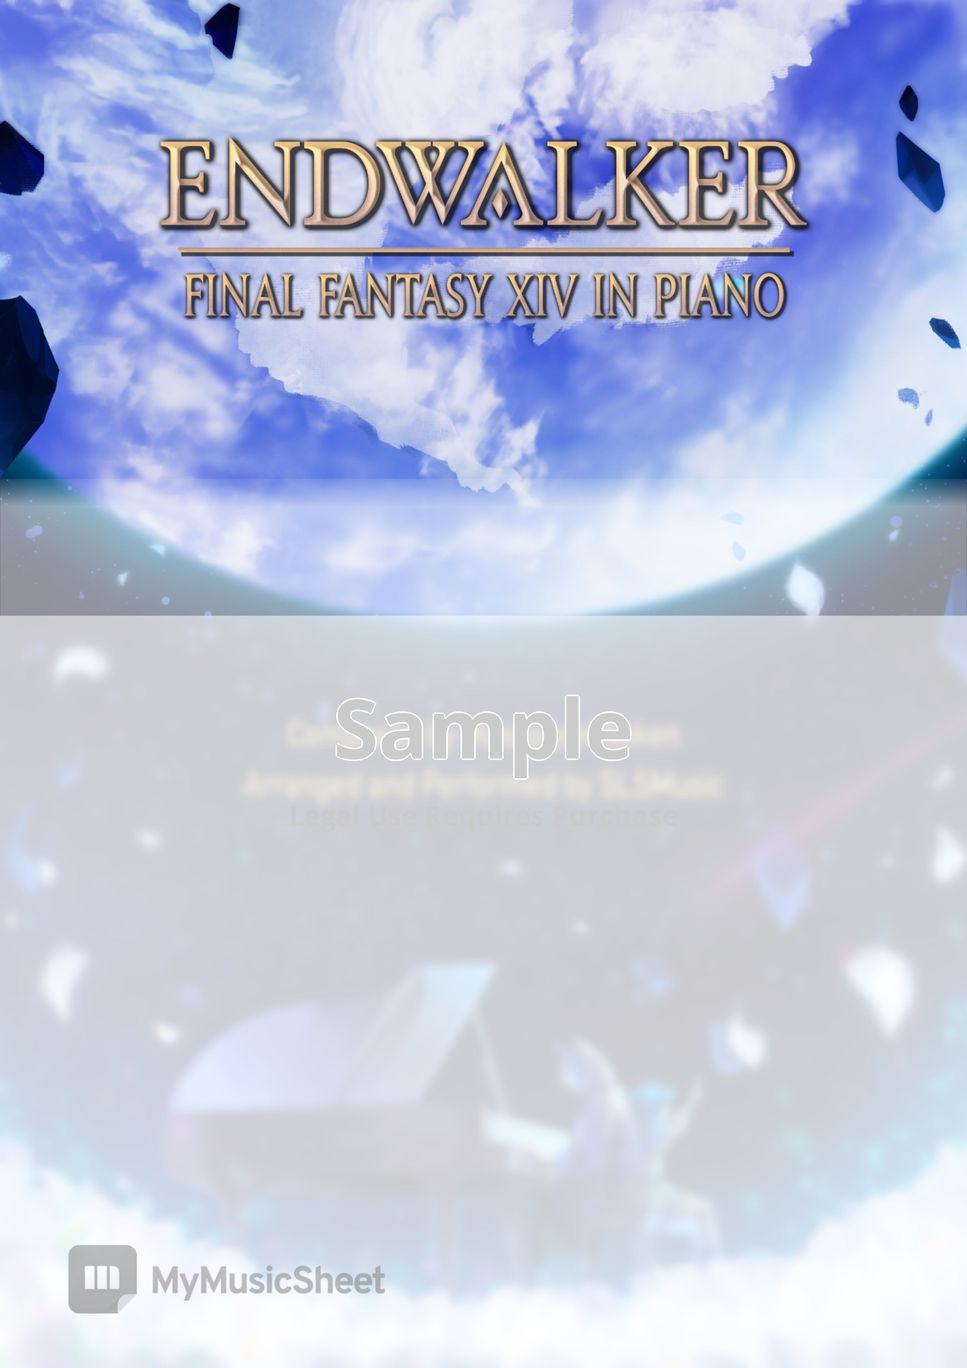 FINAL FANTASY XIV - ENDWALKER: FINAL FANTASY XIV in Piano (Masayoshi Soken) by SLSMusic